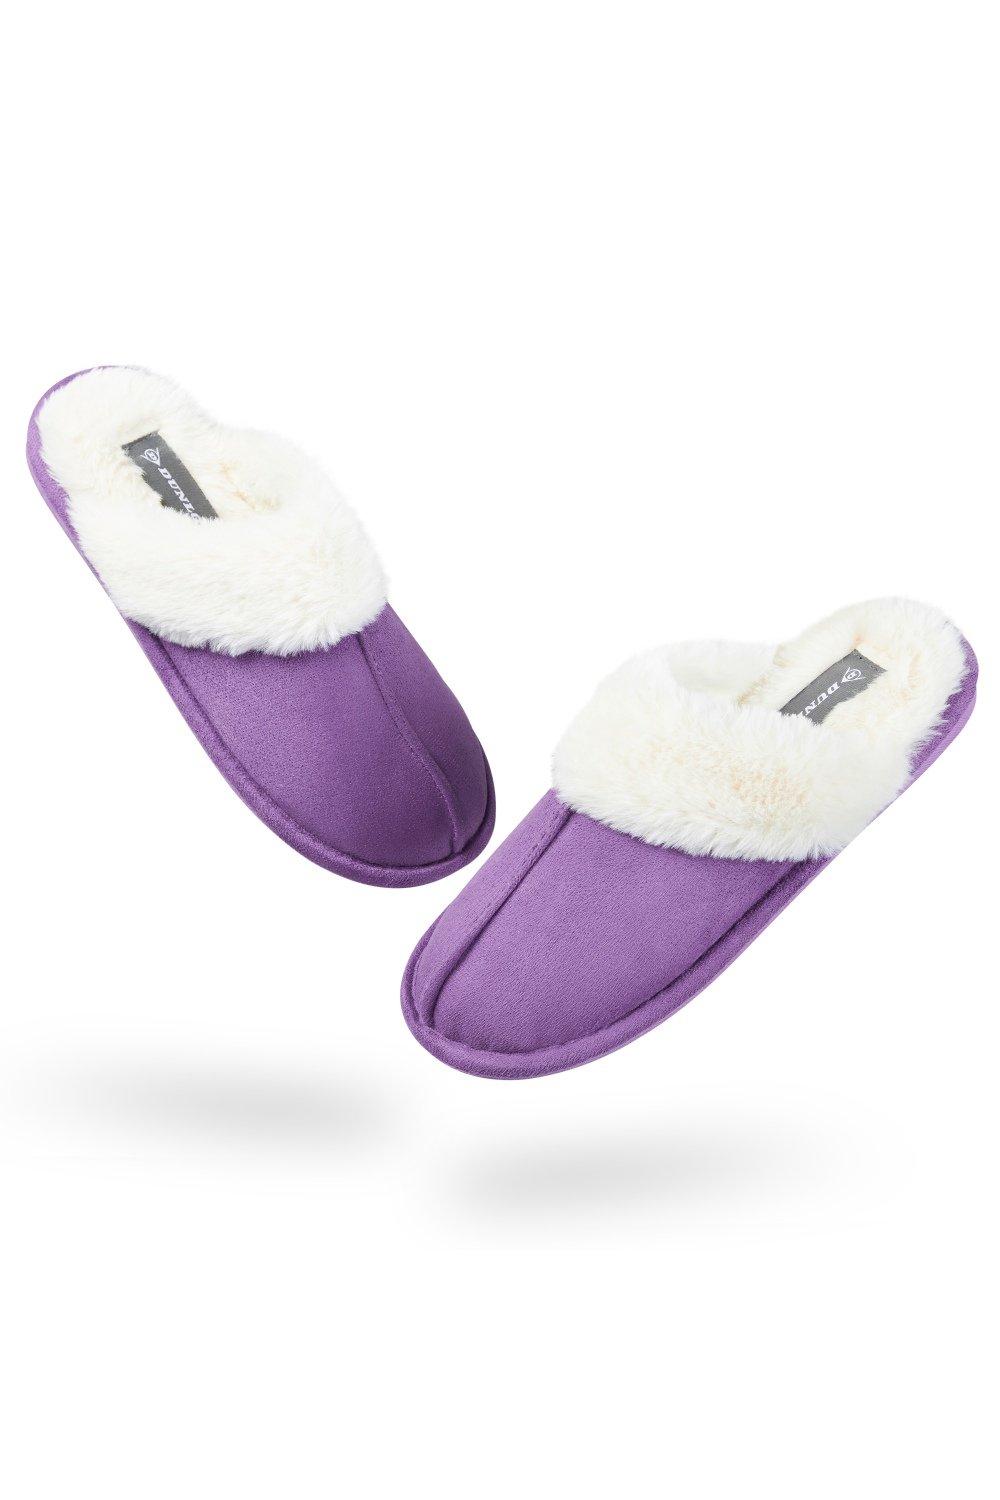 bebealy suede fur plush slippers for women winter fuzzy soft collar fur lining fluffy slippers indoor furry house slippers women Домашние пушистые тапочки на толстой меховой подкладке Dunlop, фиолетовый